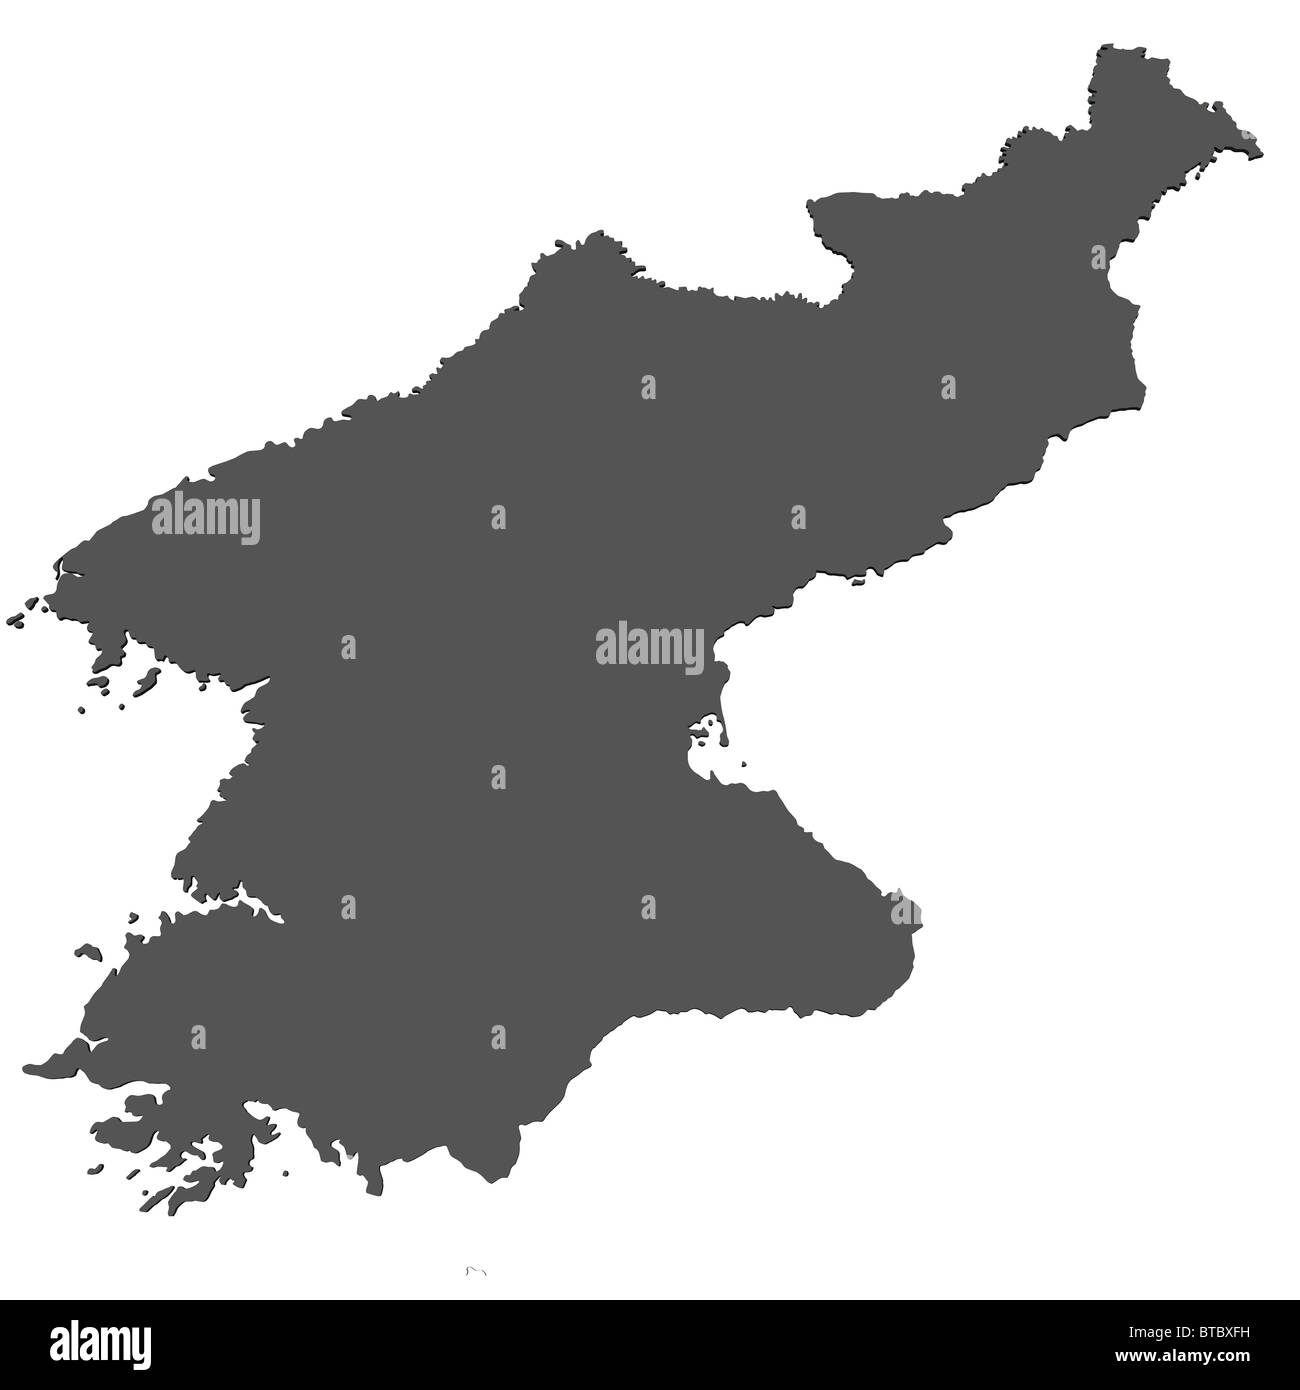 Korea map Black and White Stock Photos & Images - Alamy